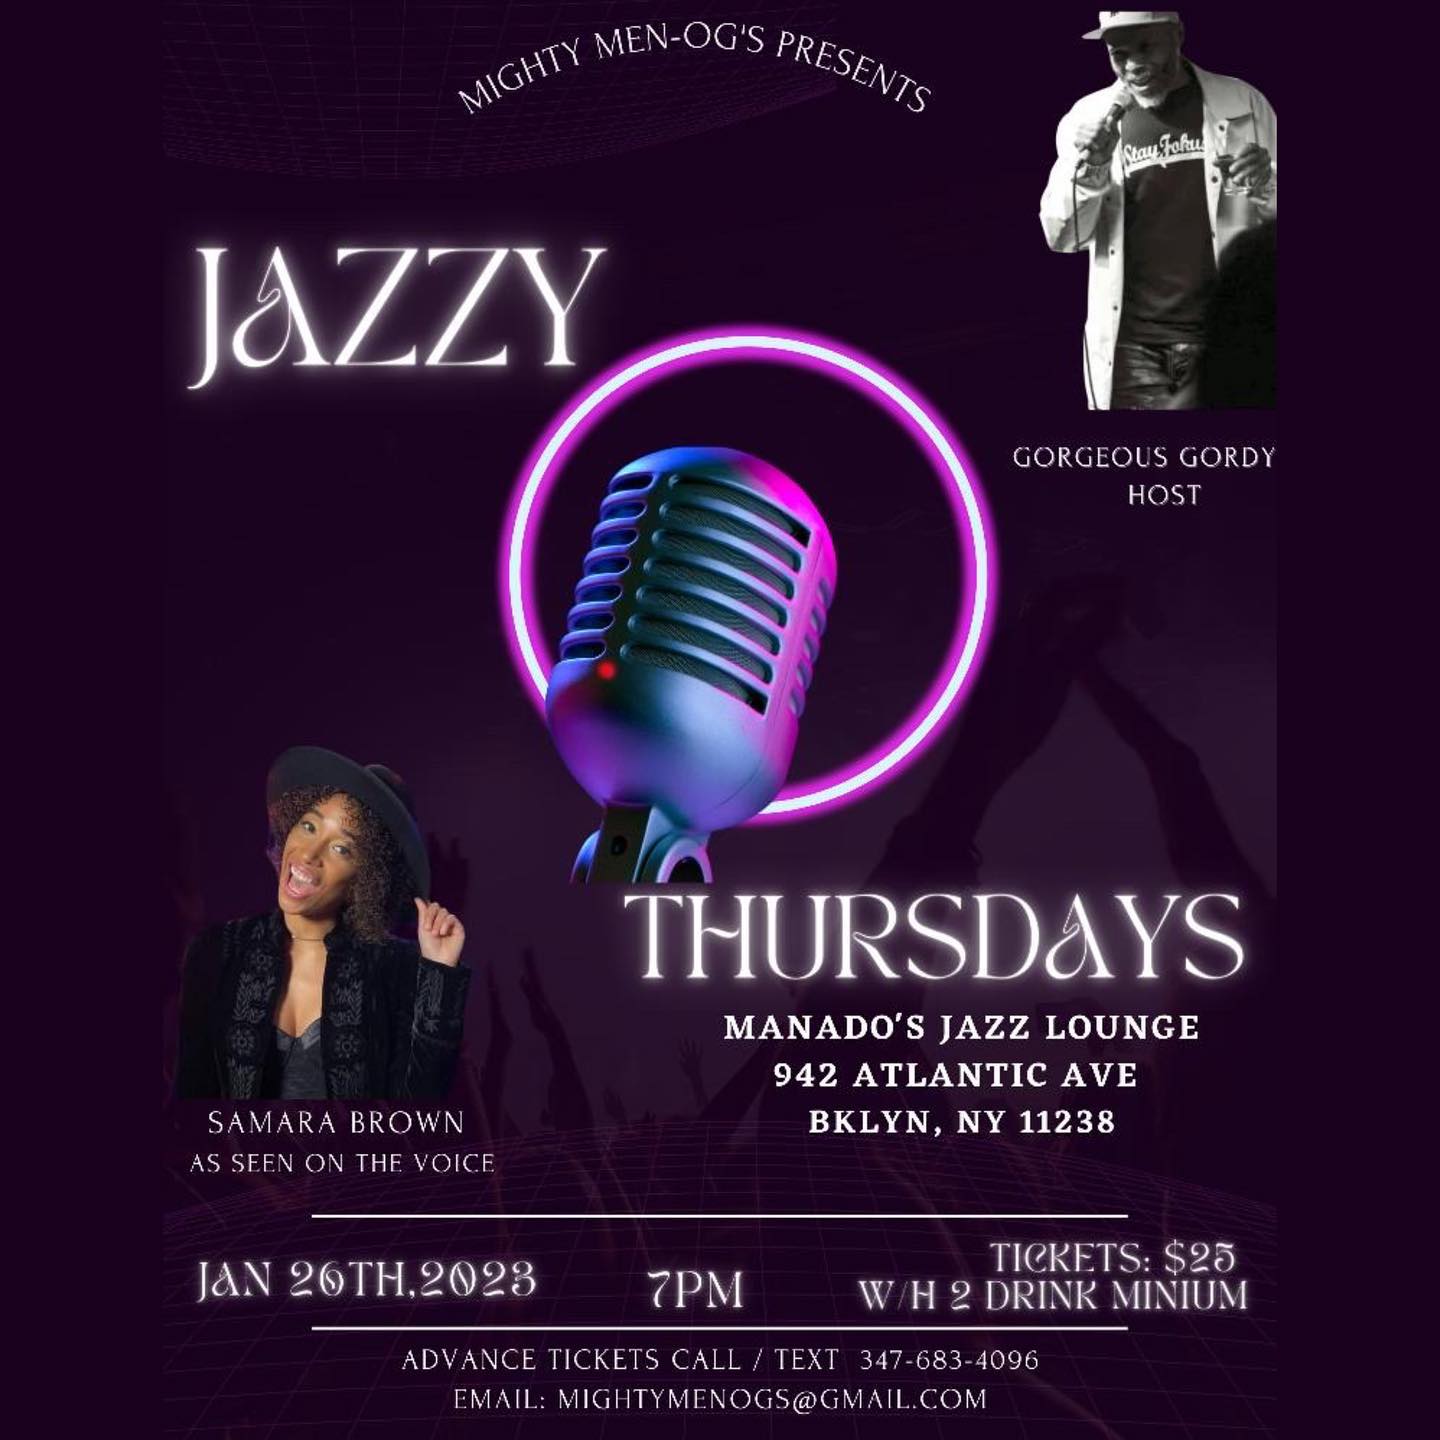 Jazzy Thursdays with Samara Brown at Manado's Jazz Lounge